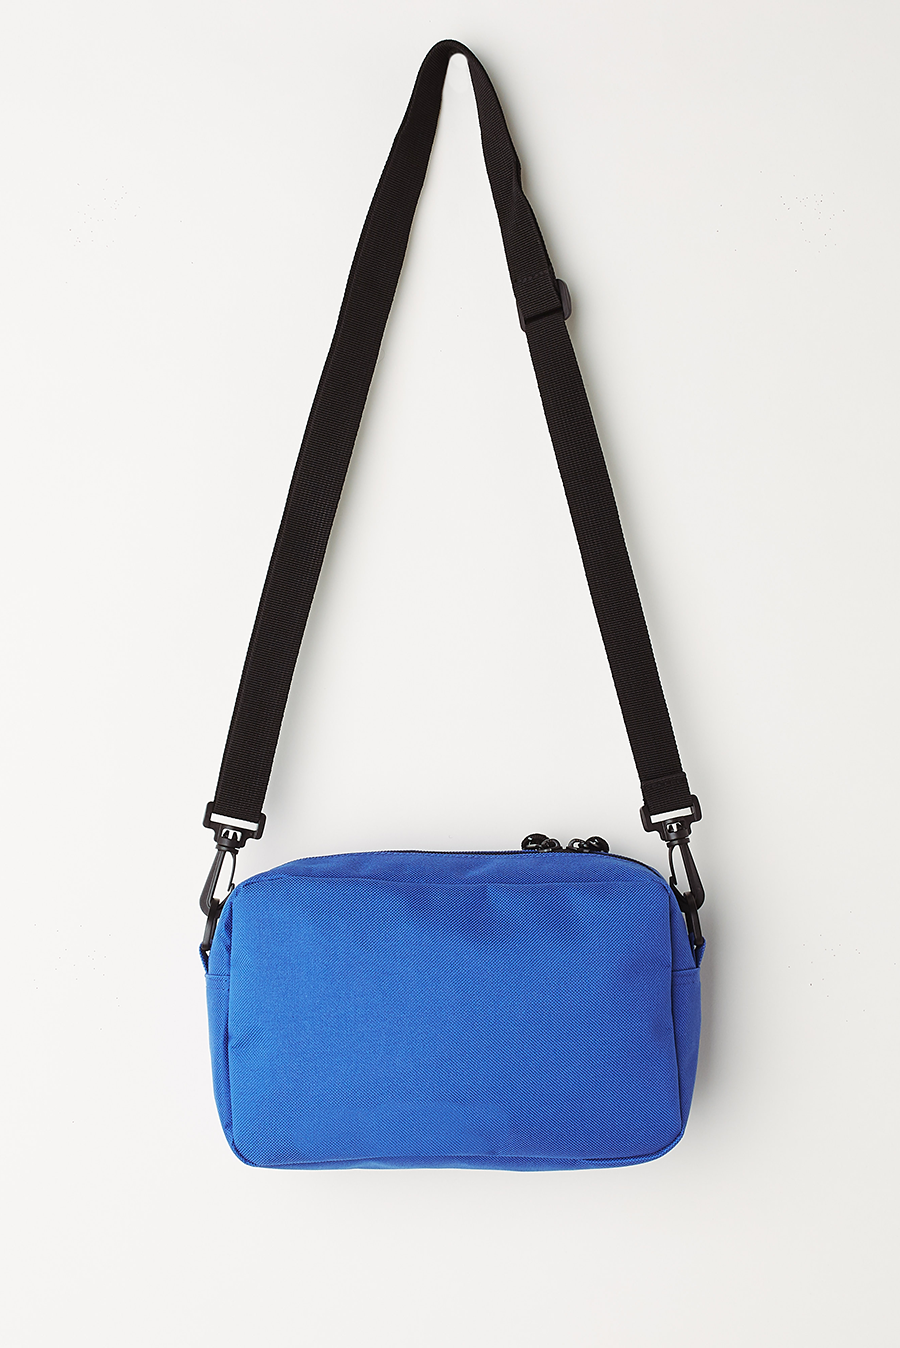 Wasted Sling Bag | Blue - Main Image Number 2 of 2